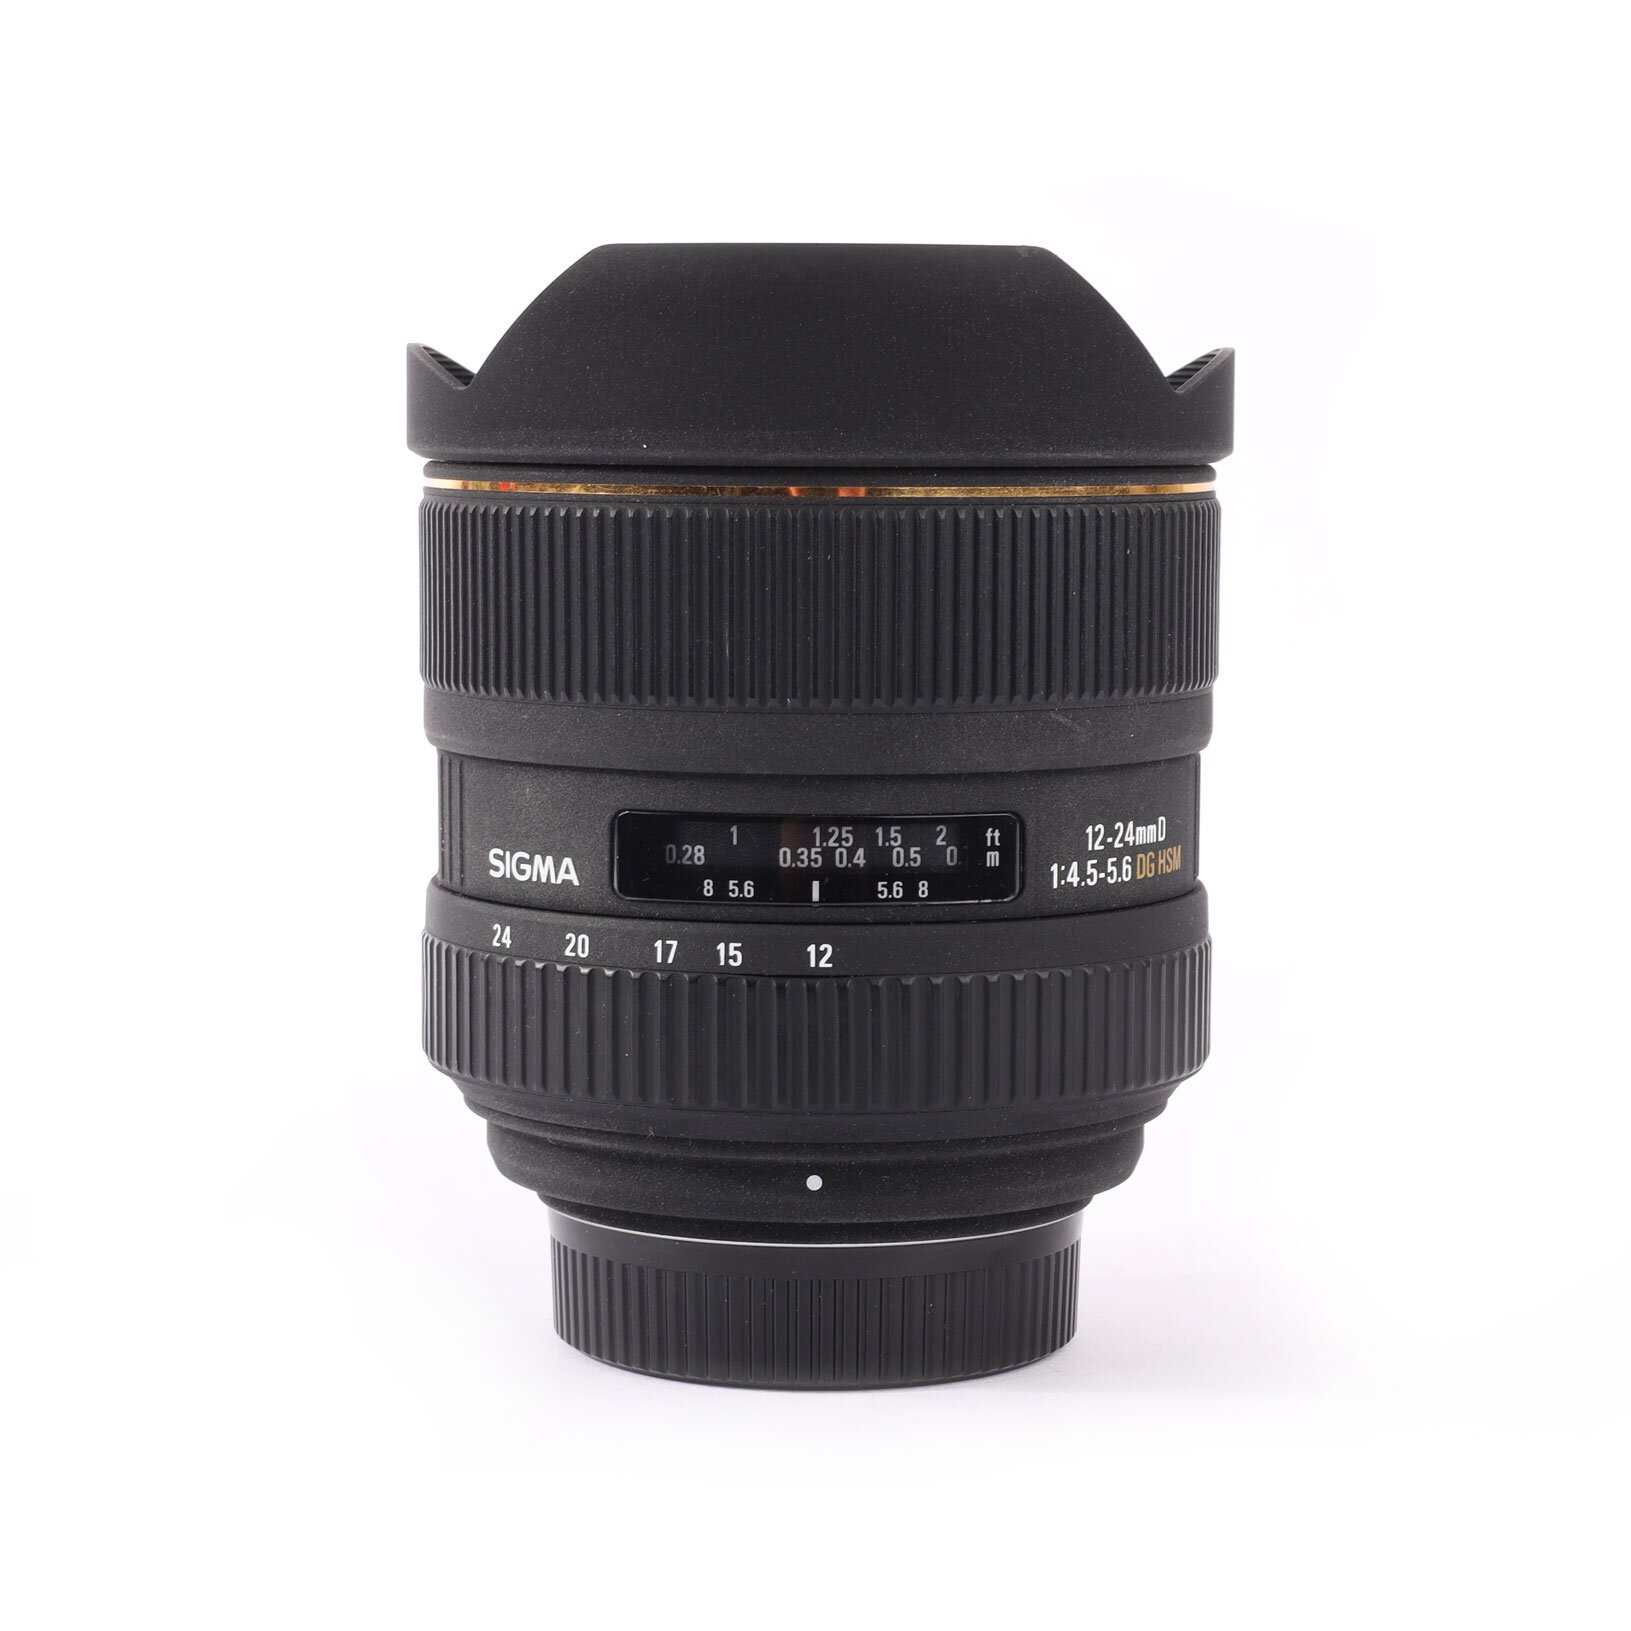 Sigma EX 4.5-5.6/12-24mm DG Nikon AFS